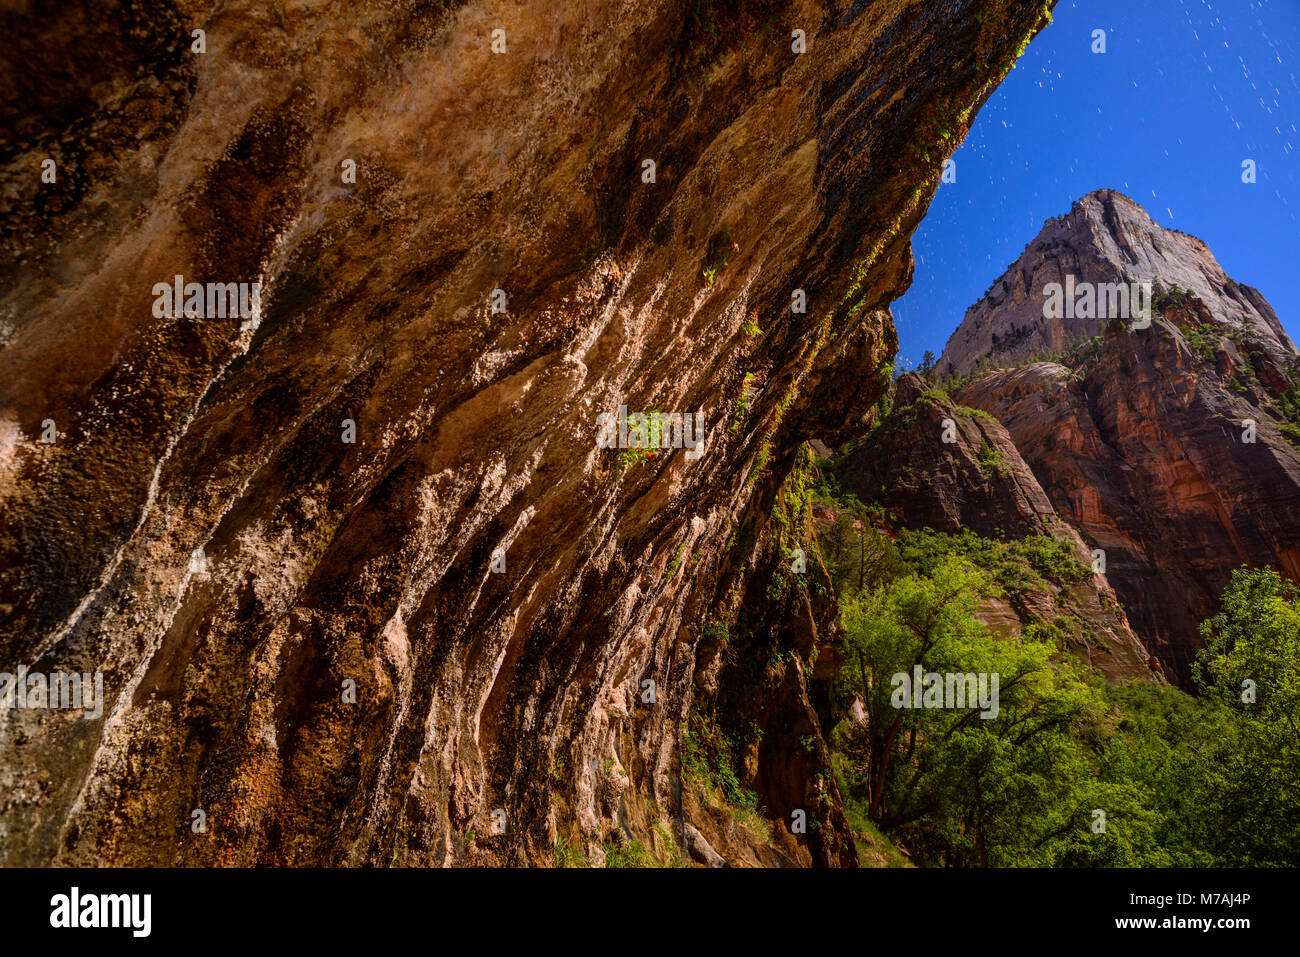 The USA, Utah, Washington county, Springdale, Zion National Park, Zion canyon, weeping rock Stock Photo